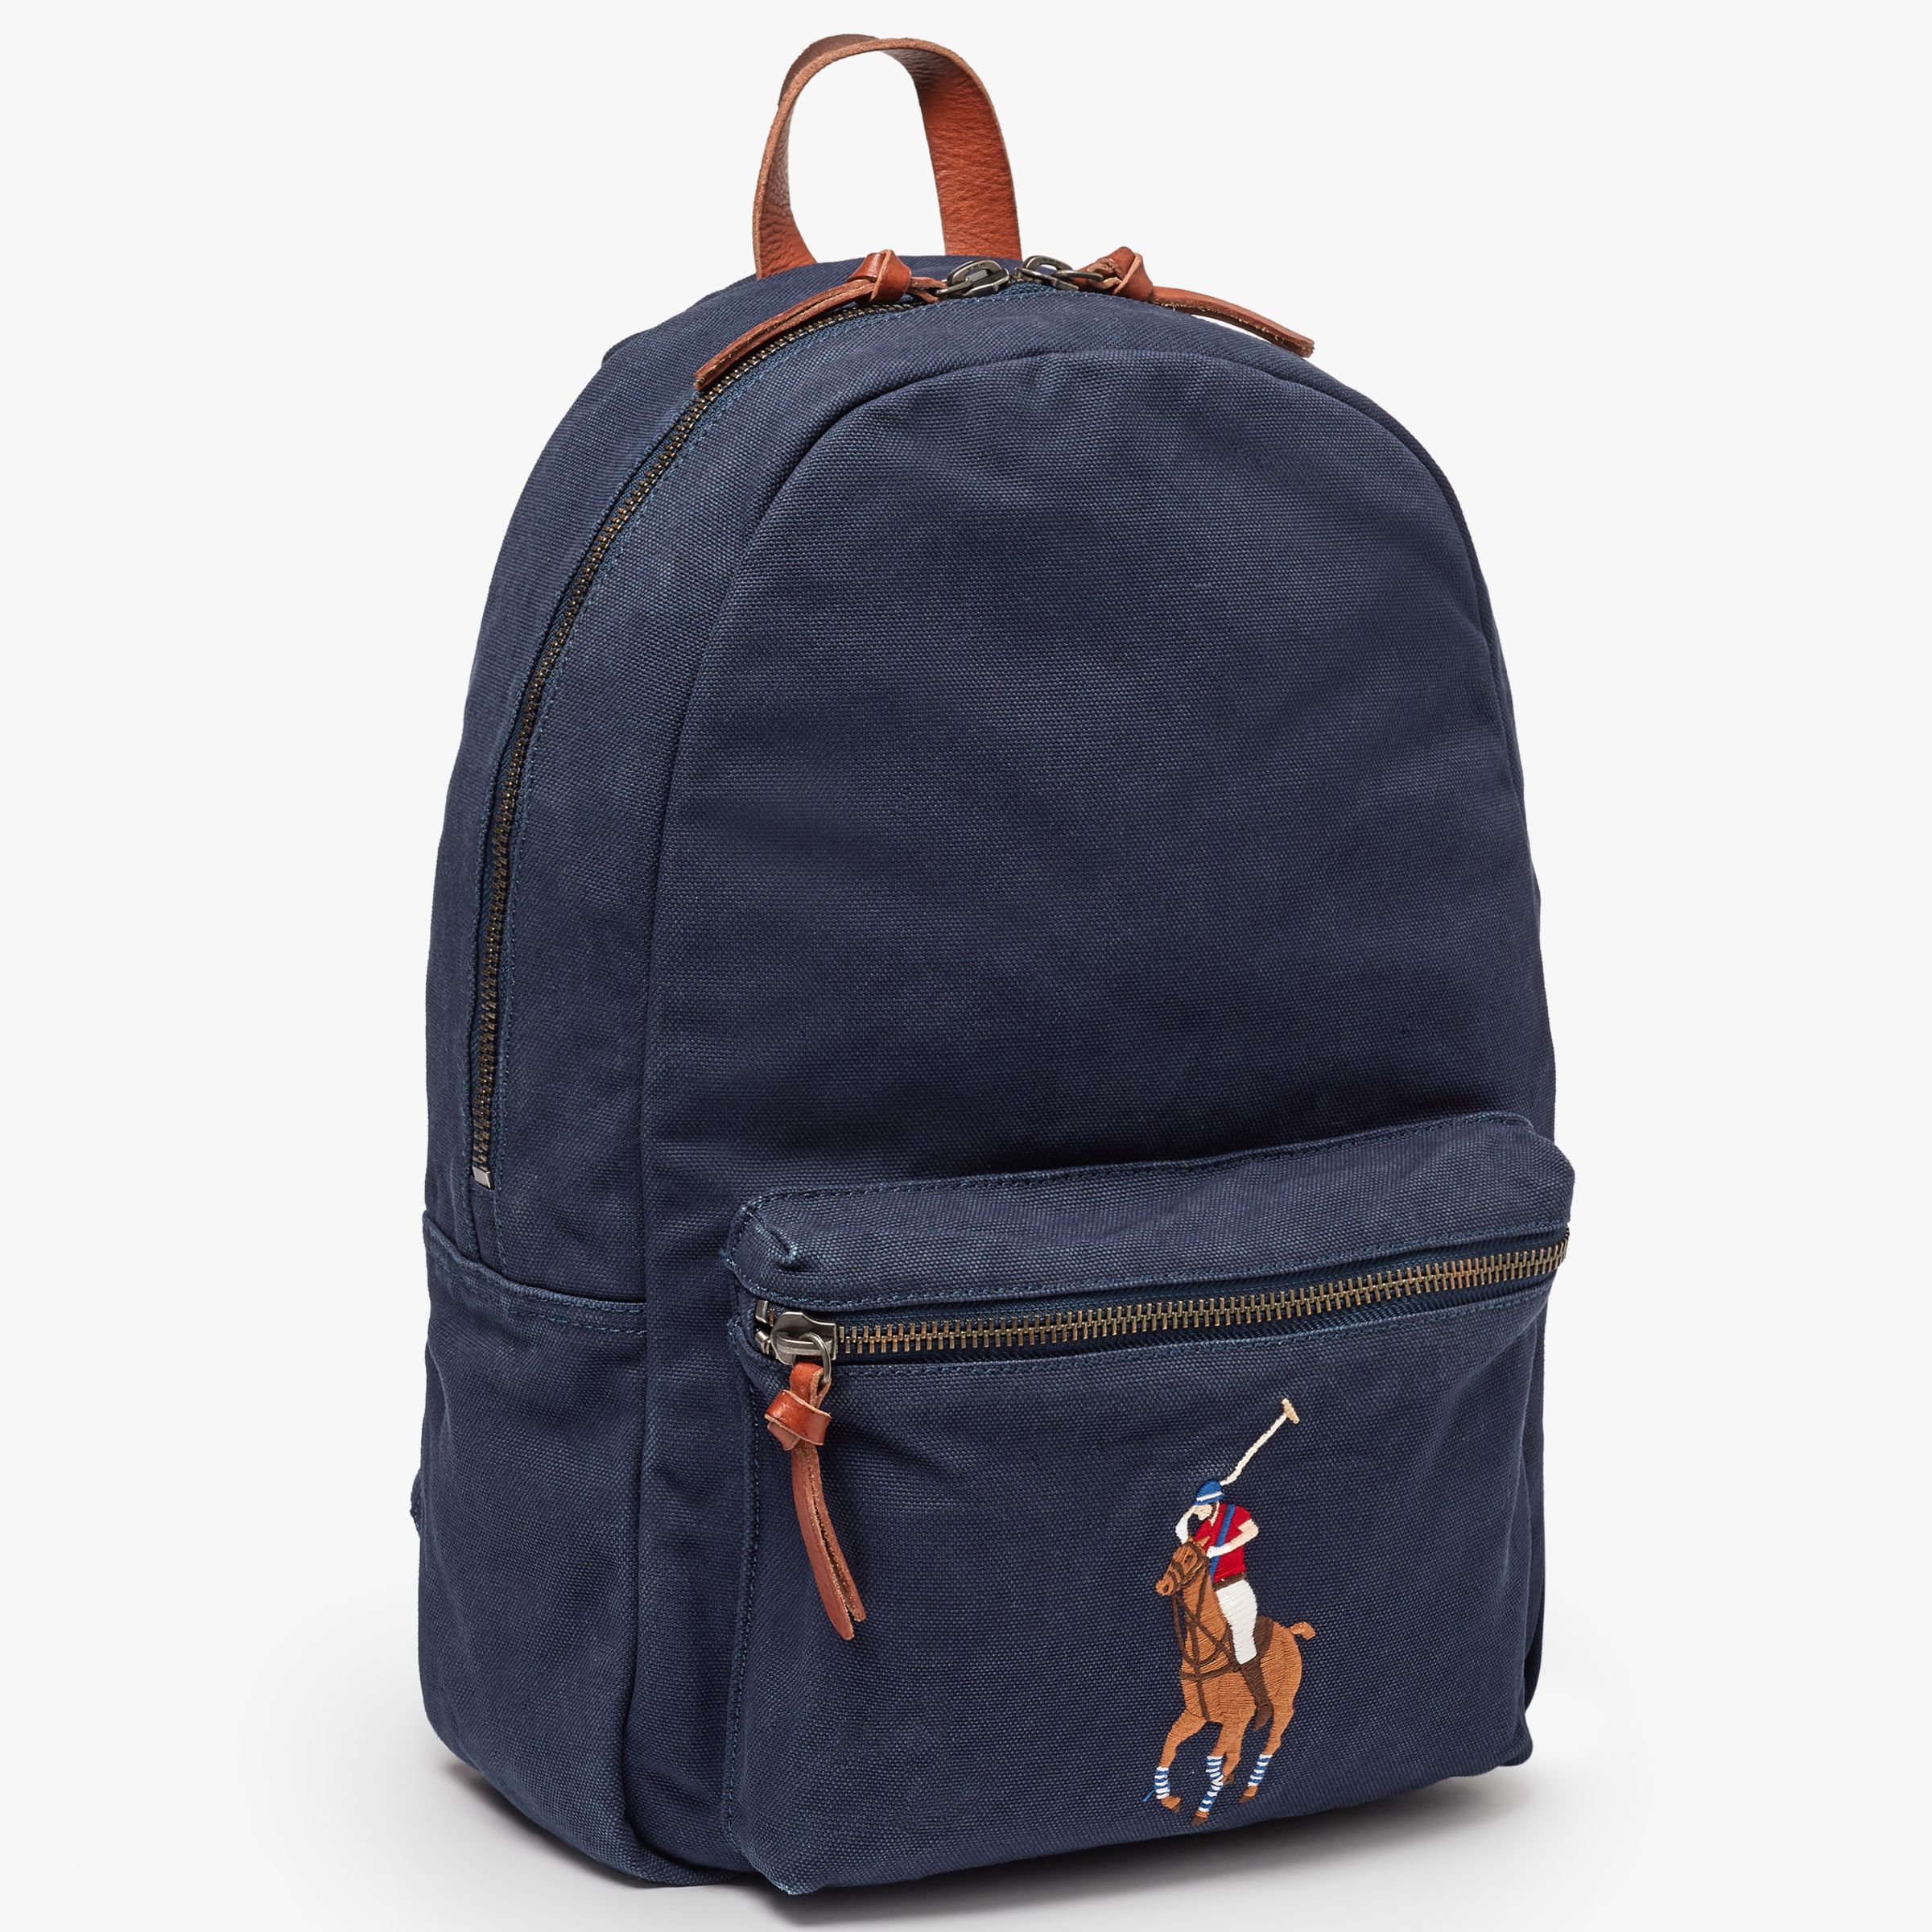 backpack polo ralph lauren